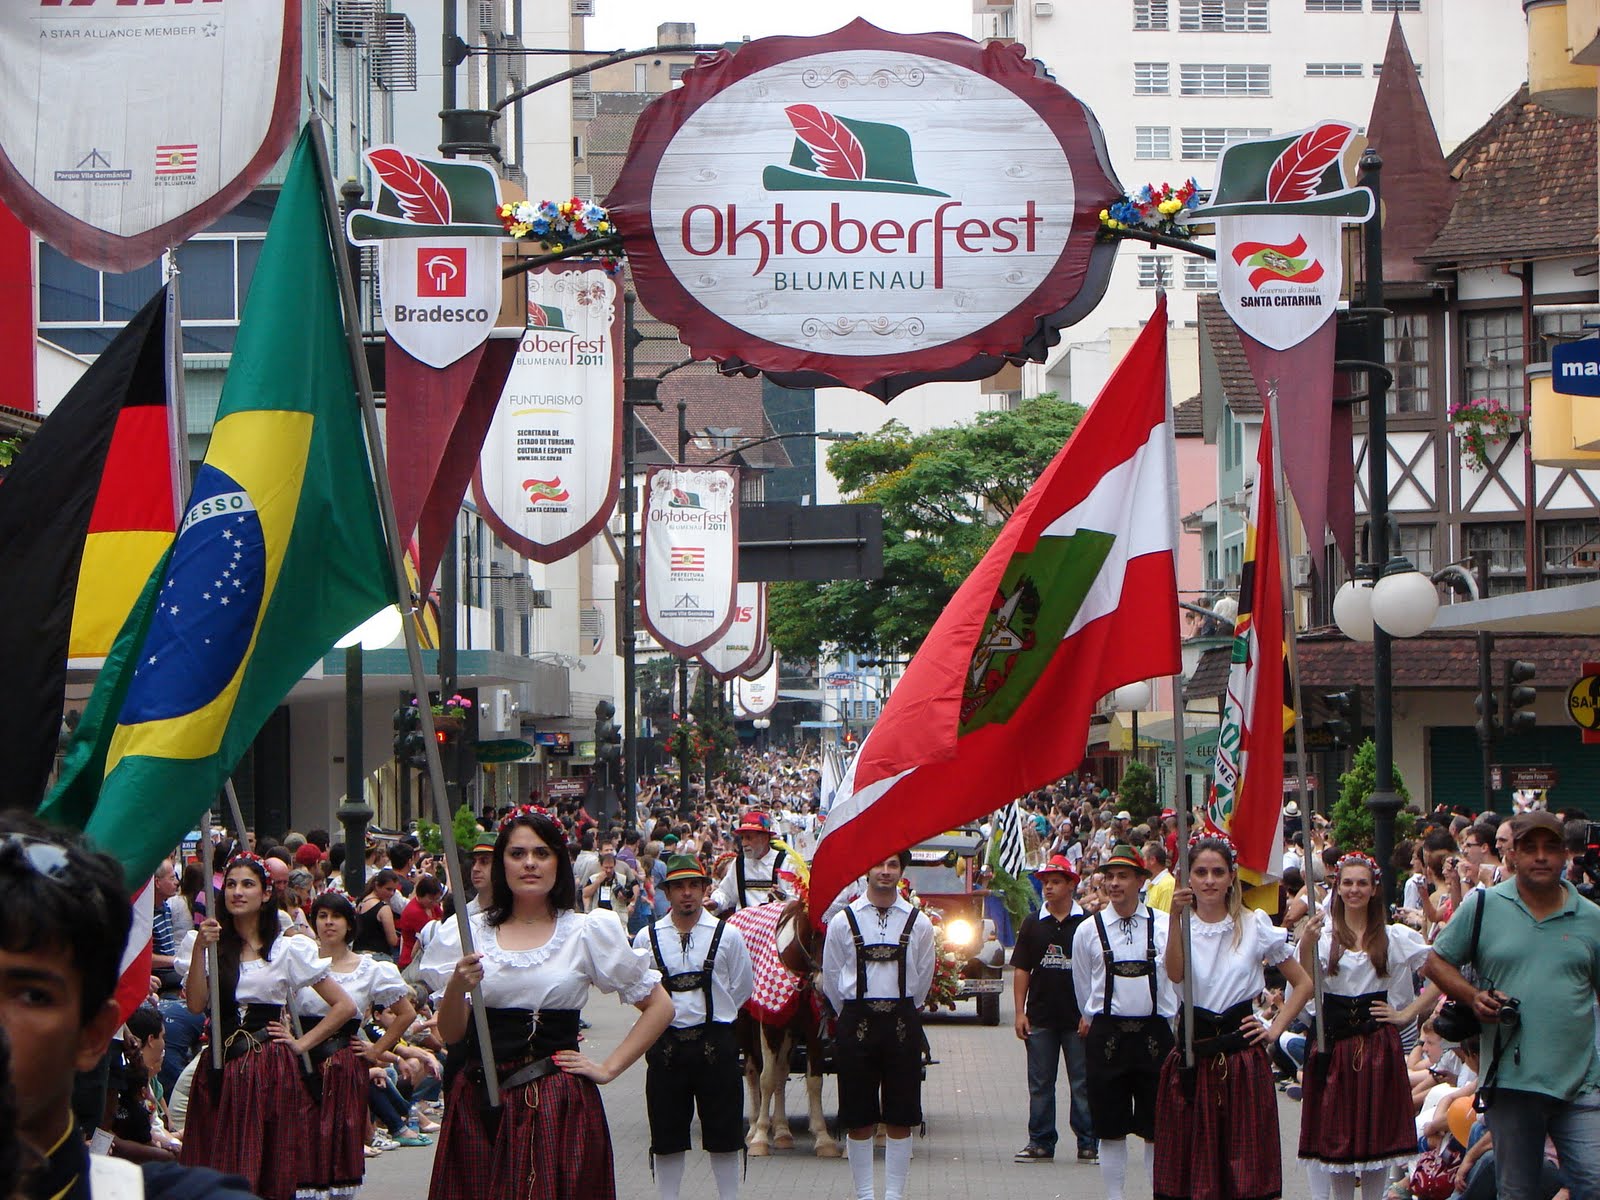 Blumenau's Oktoberfest is the second largest in the world.